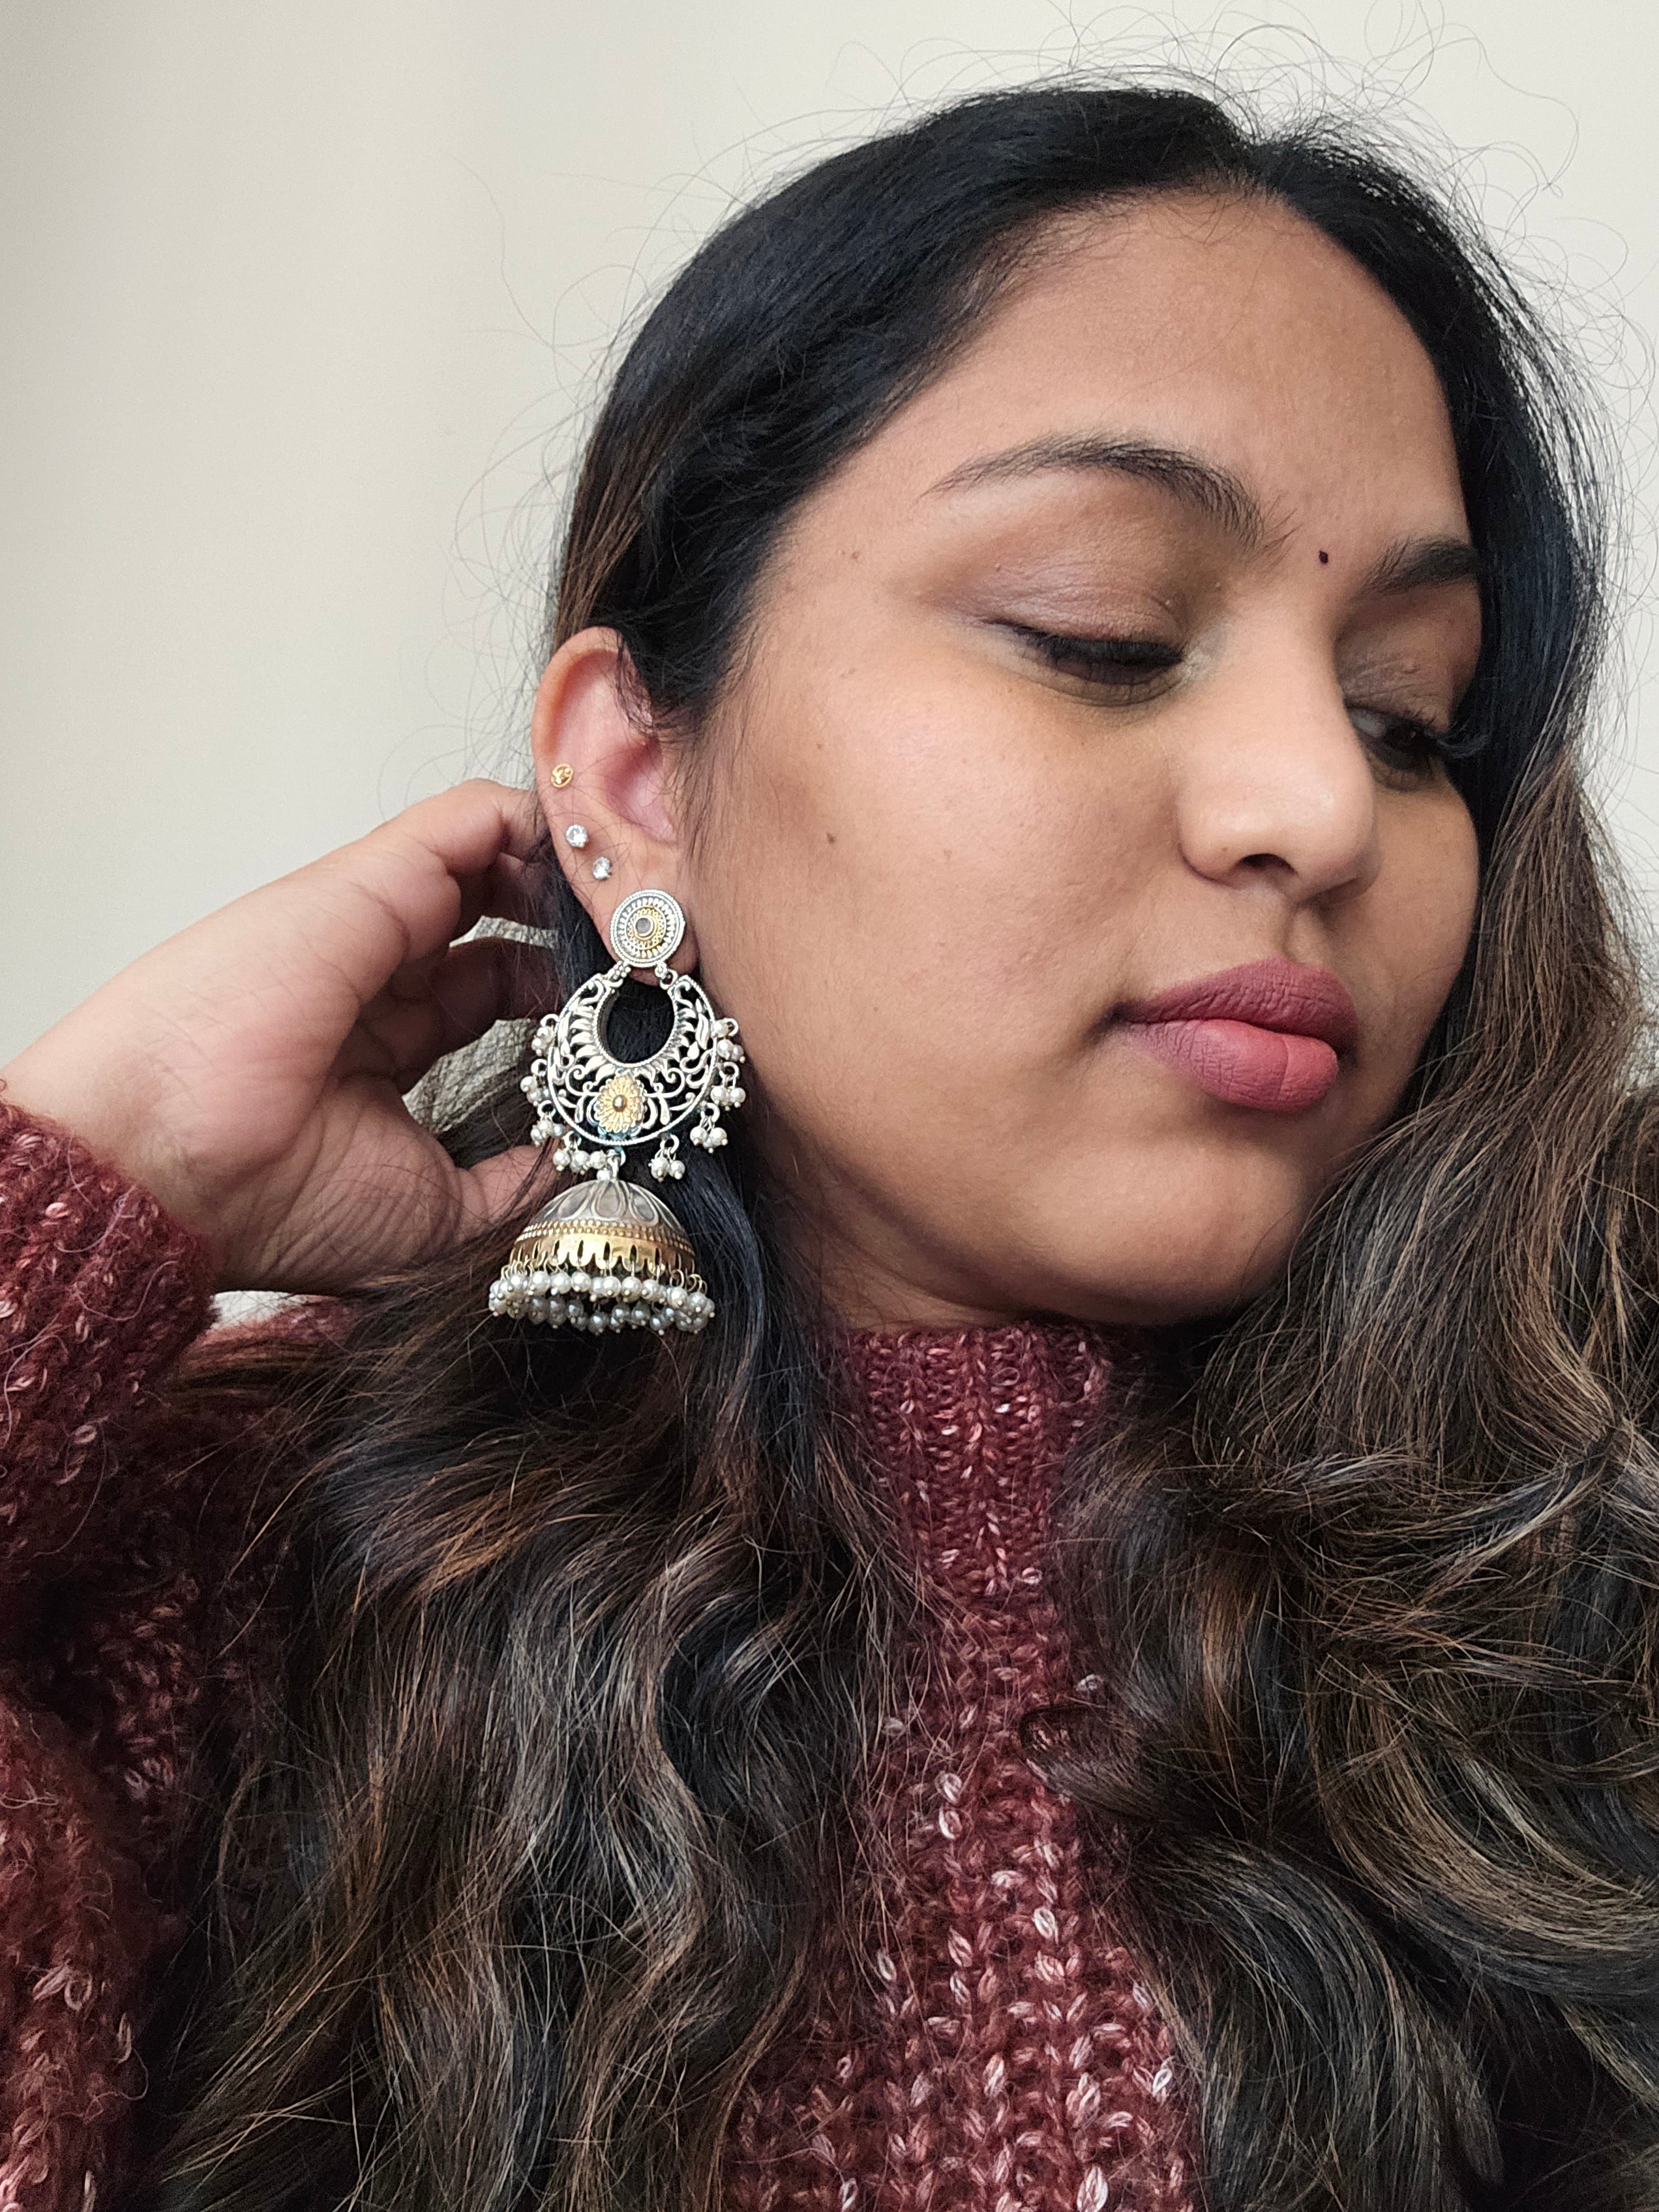 Ahana dualtone silver alike jhumka earrings